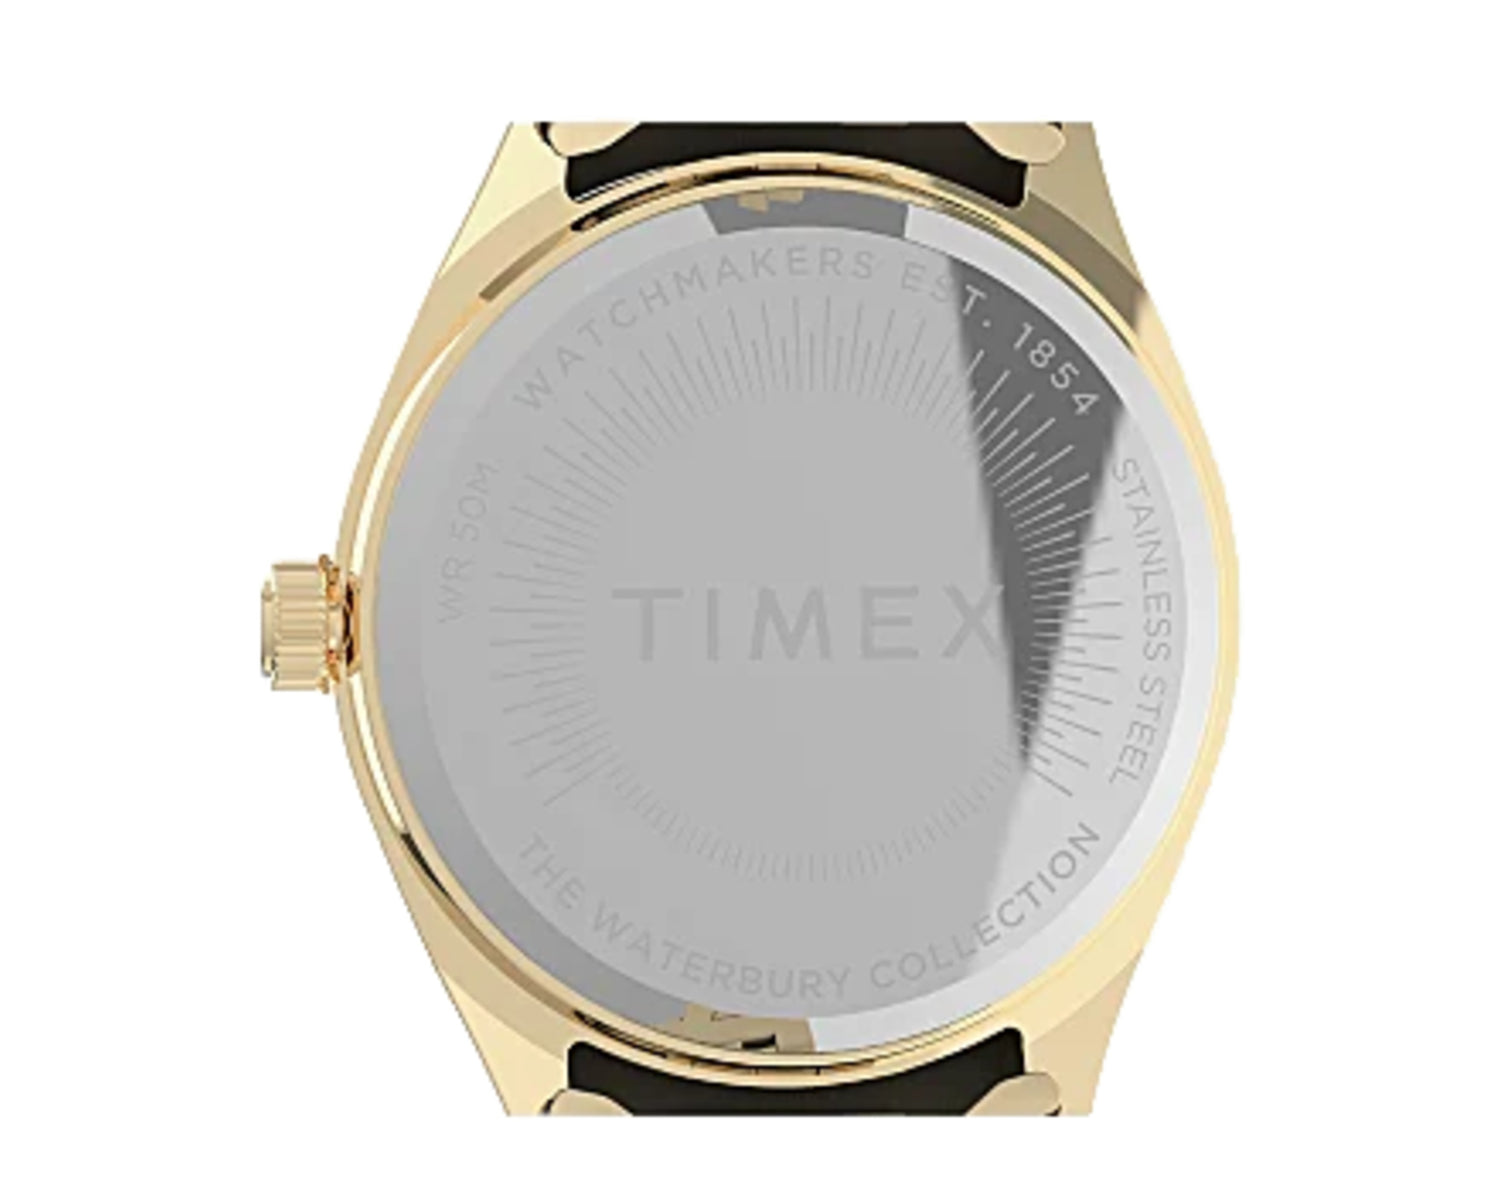 Timex Waterbury Legacy Boyfriend 36mm Stainless Steel Bracelet Watch